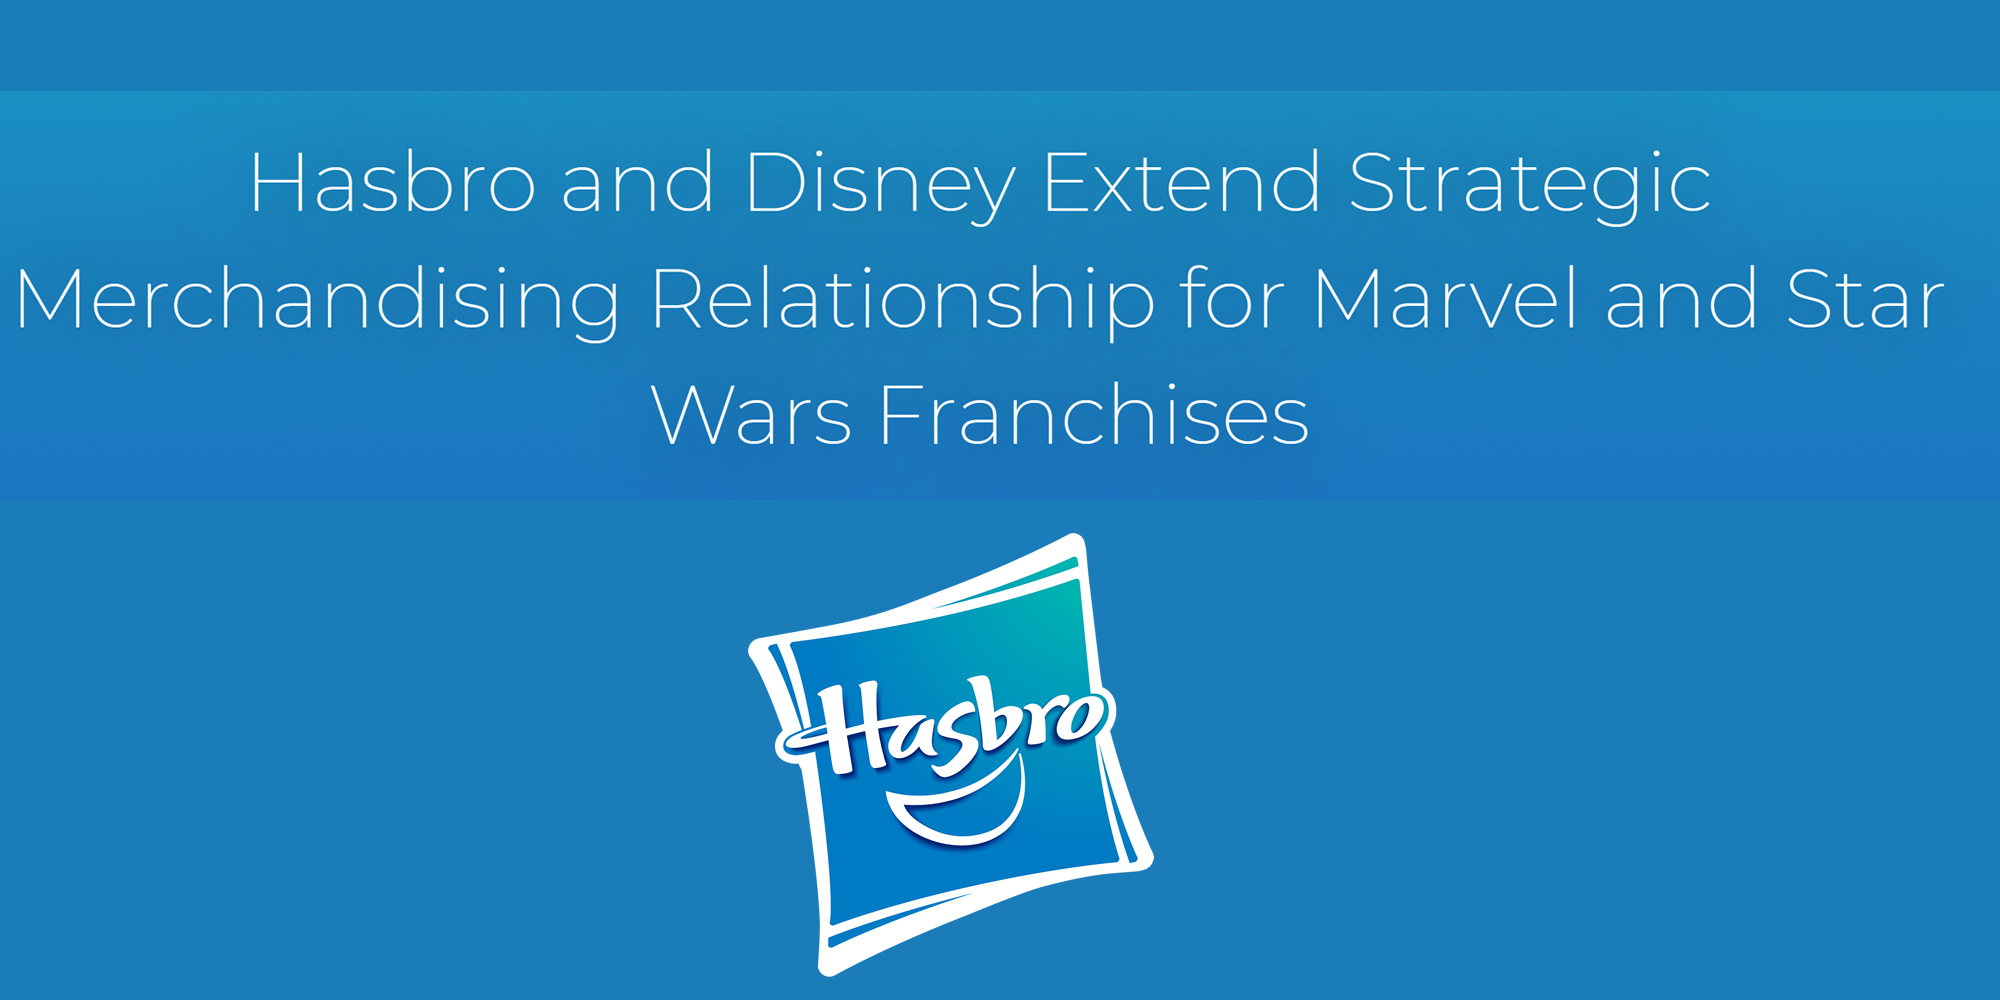 Hasbro and Disney Extend Strategic Merchandising Relationship for Marvel and Star Wars Franchises